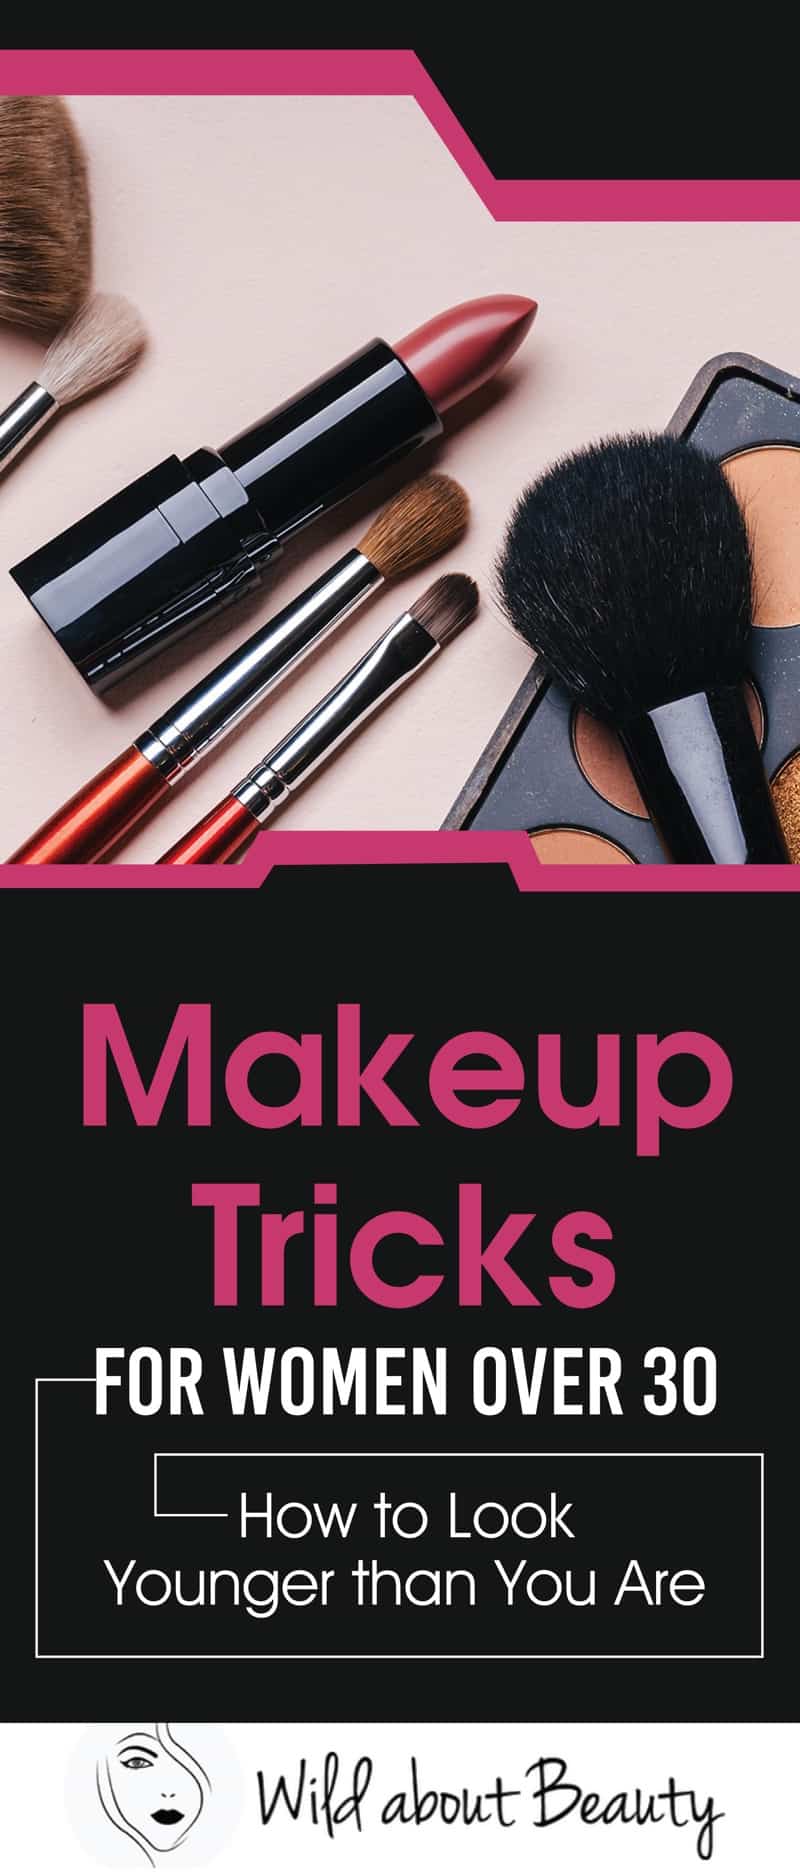 Makeup Tricks for Women Over 30